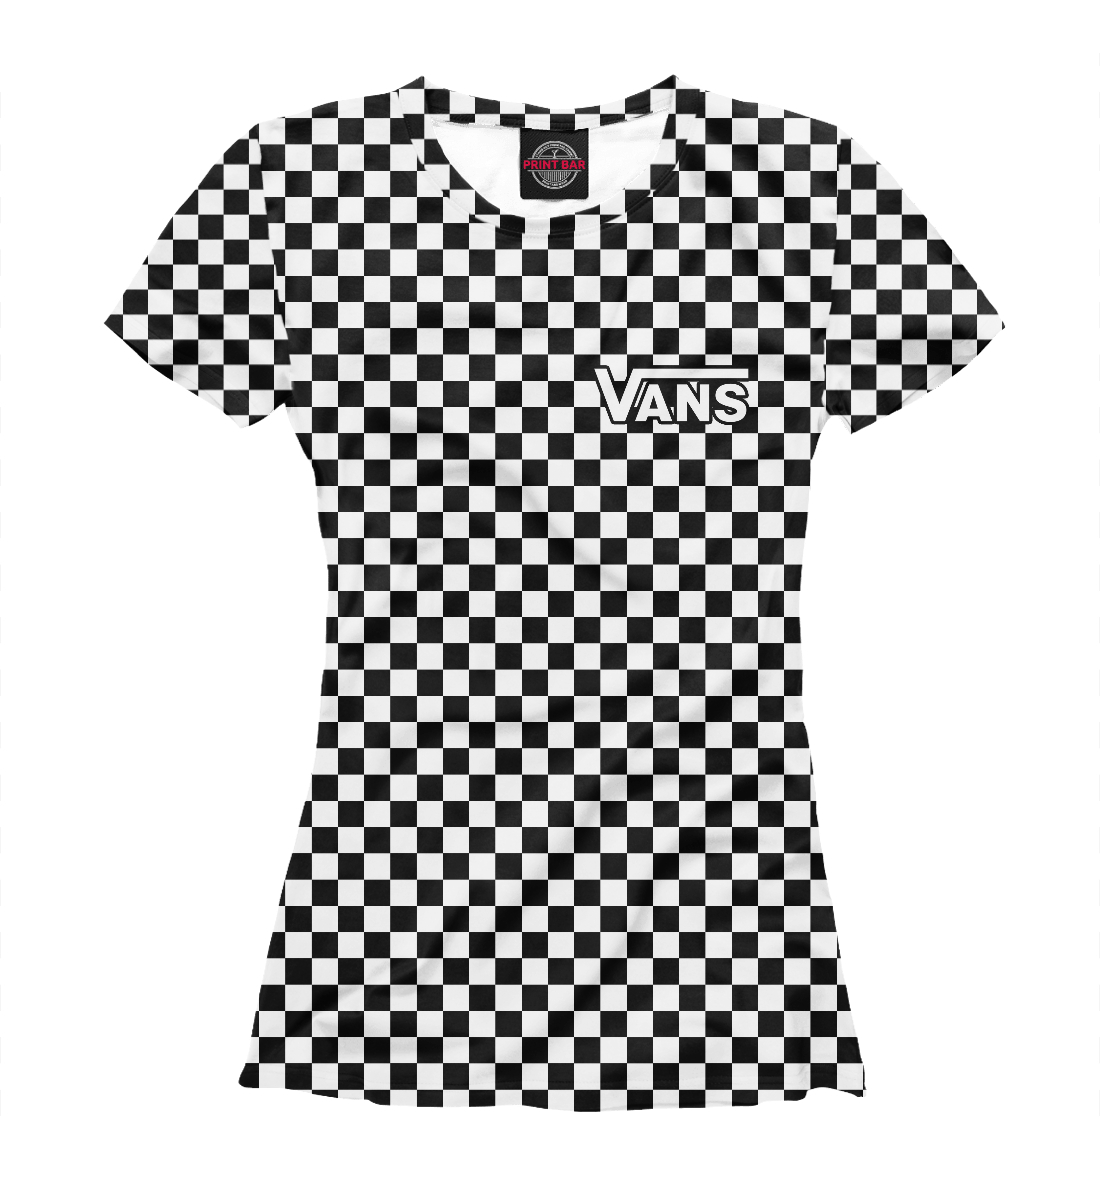 Футболка Vans Classic для женщин, артикул: VAN-153033-fut-1mp